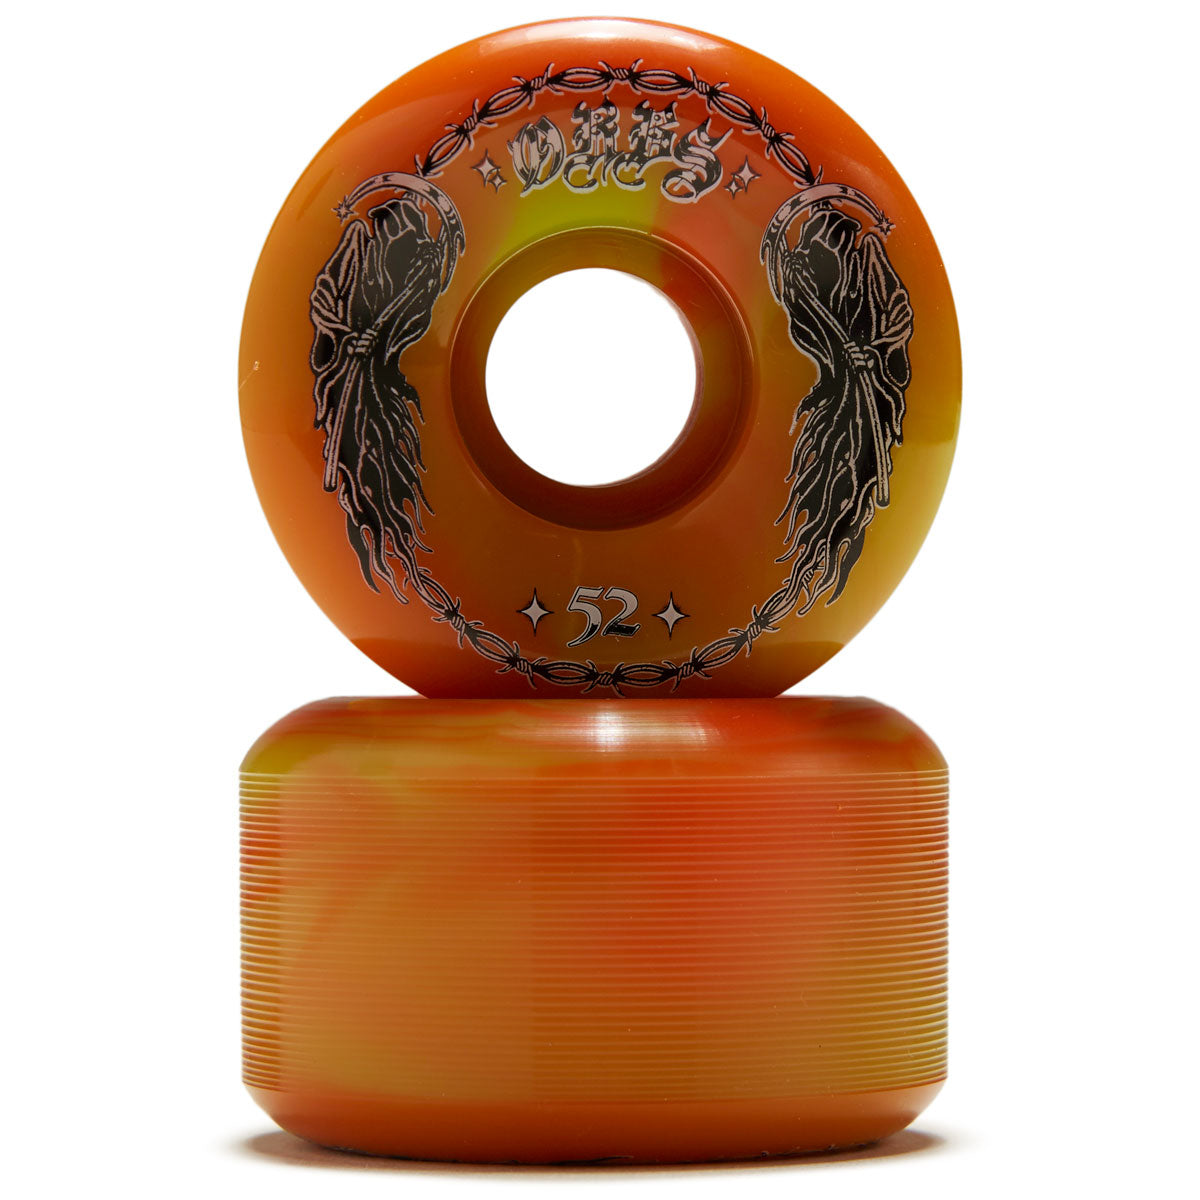 Welcome Orbs Specters '23 Conical 99A Skateboard Wheels - Green/Orange Swirl - 52mm image 2